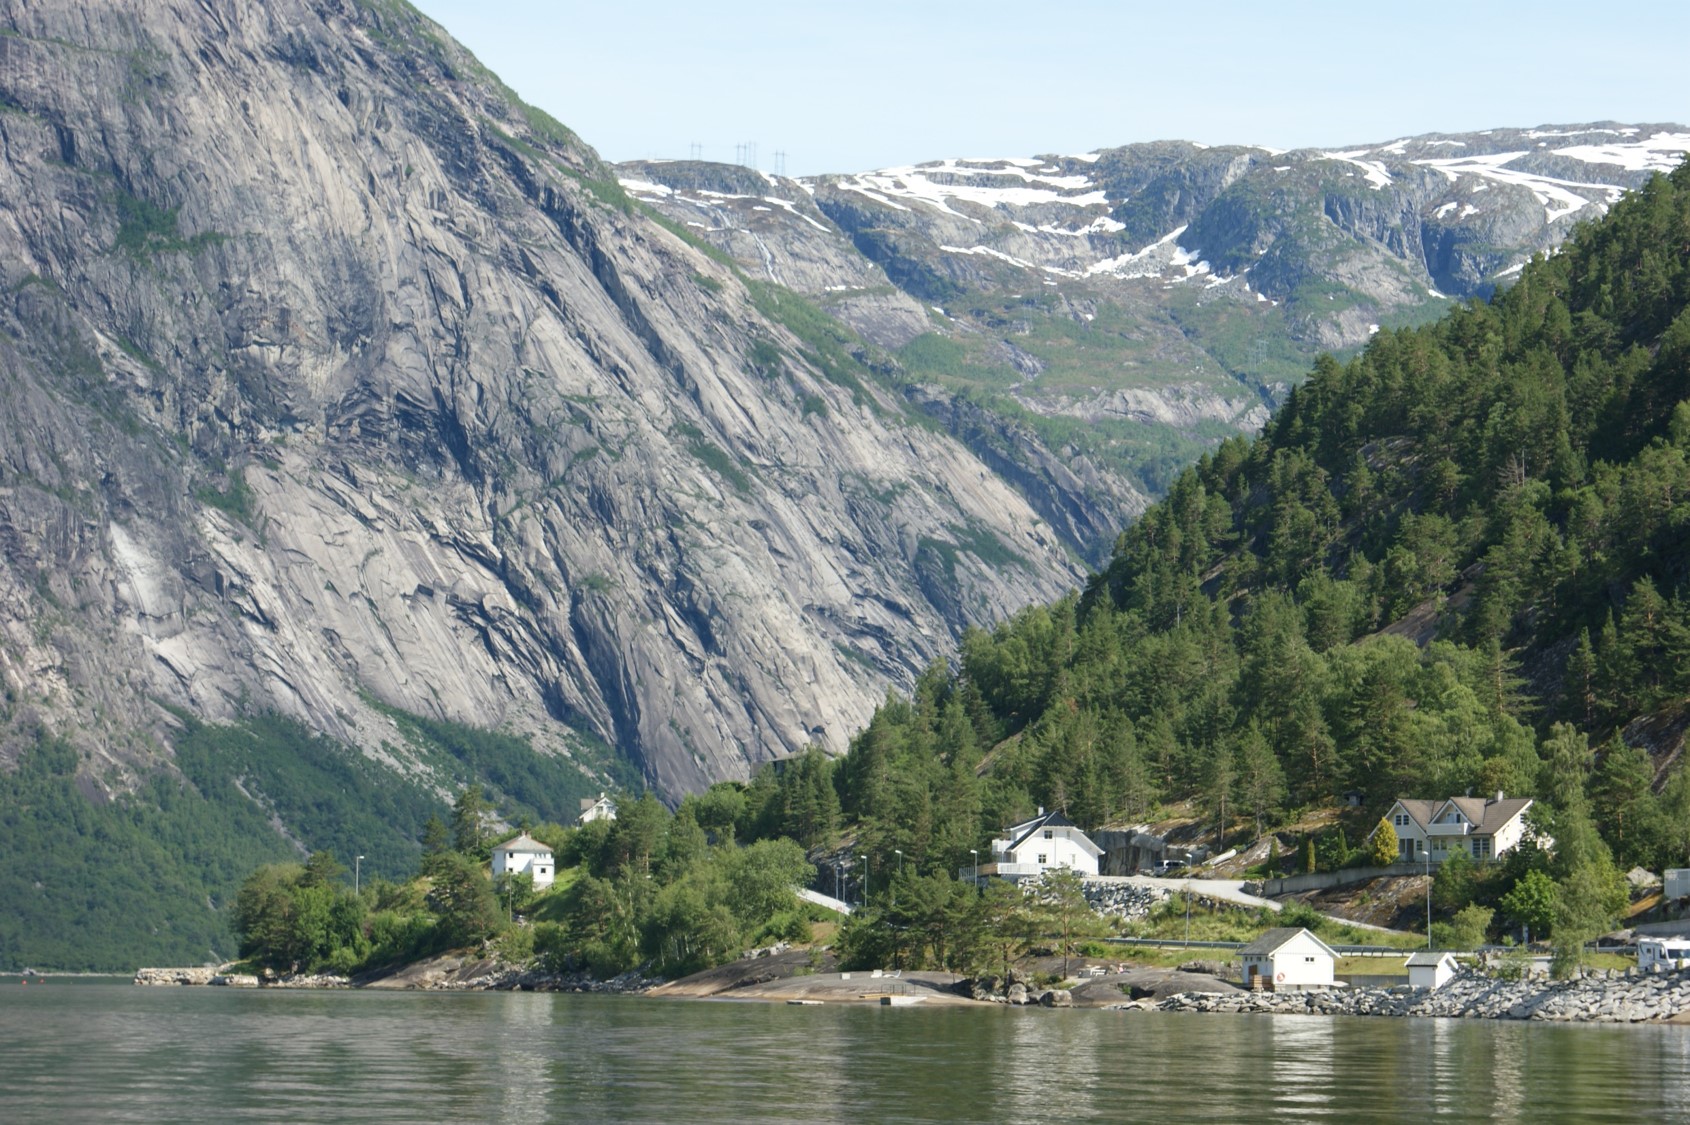 Ferientraum Reisen Norwegische Fjorde hautnah erleben